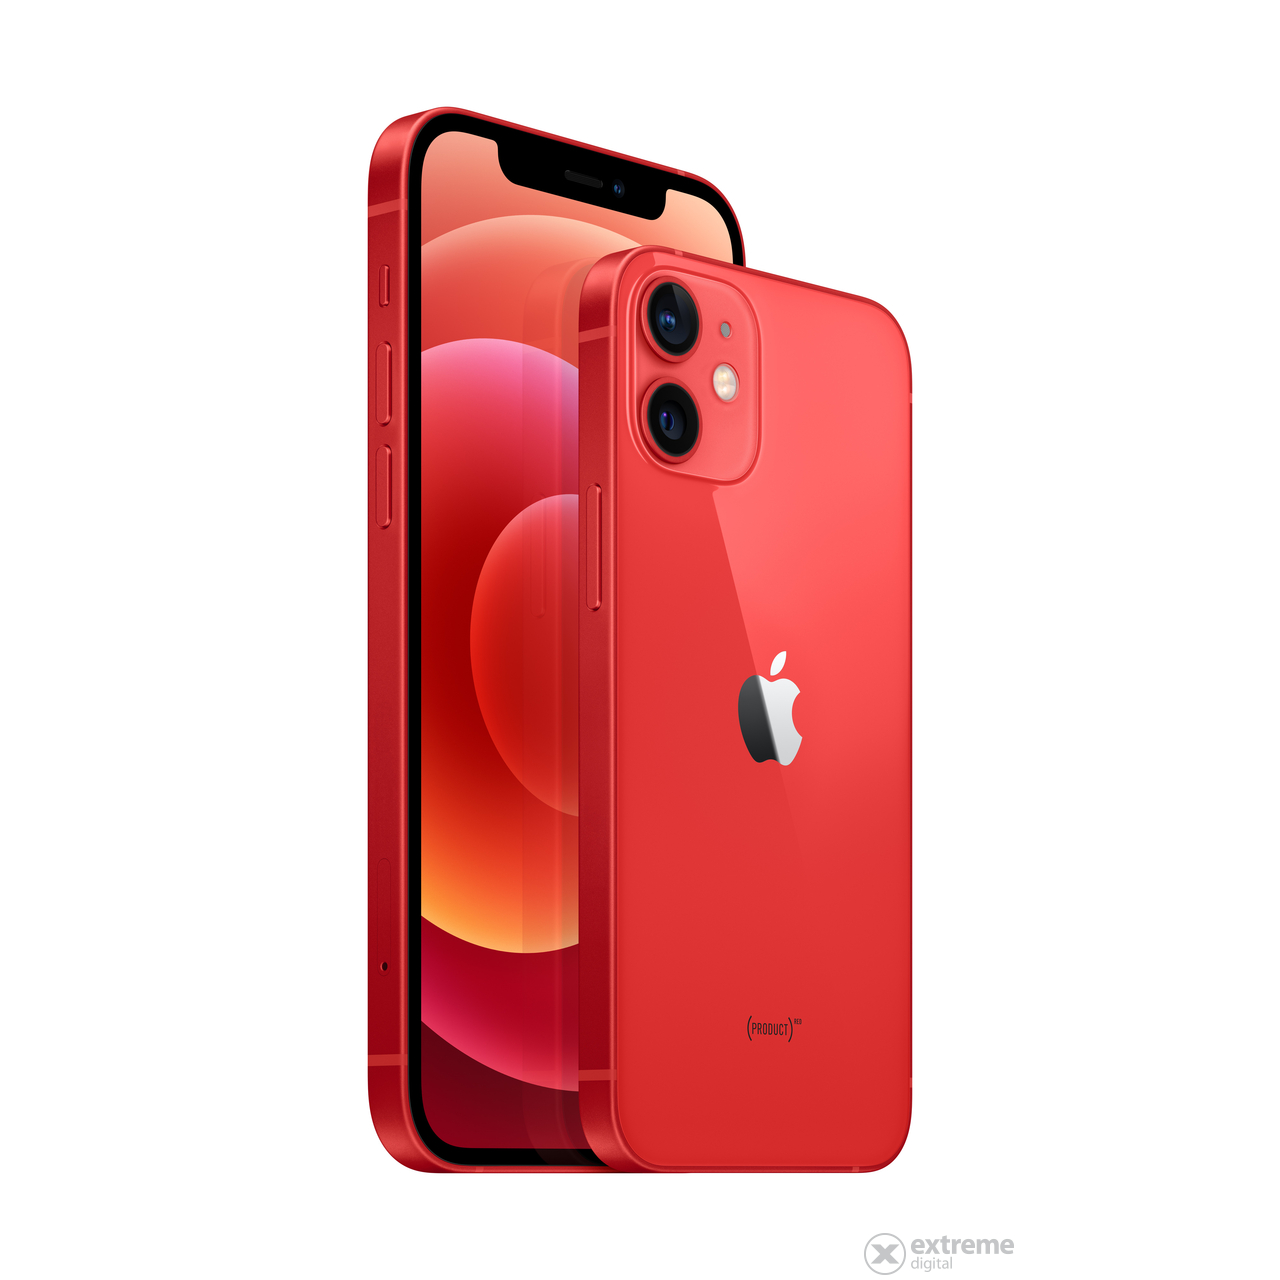 Apple iPhone 12 64GB pametni telefon (mgj73gh/a), crveni